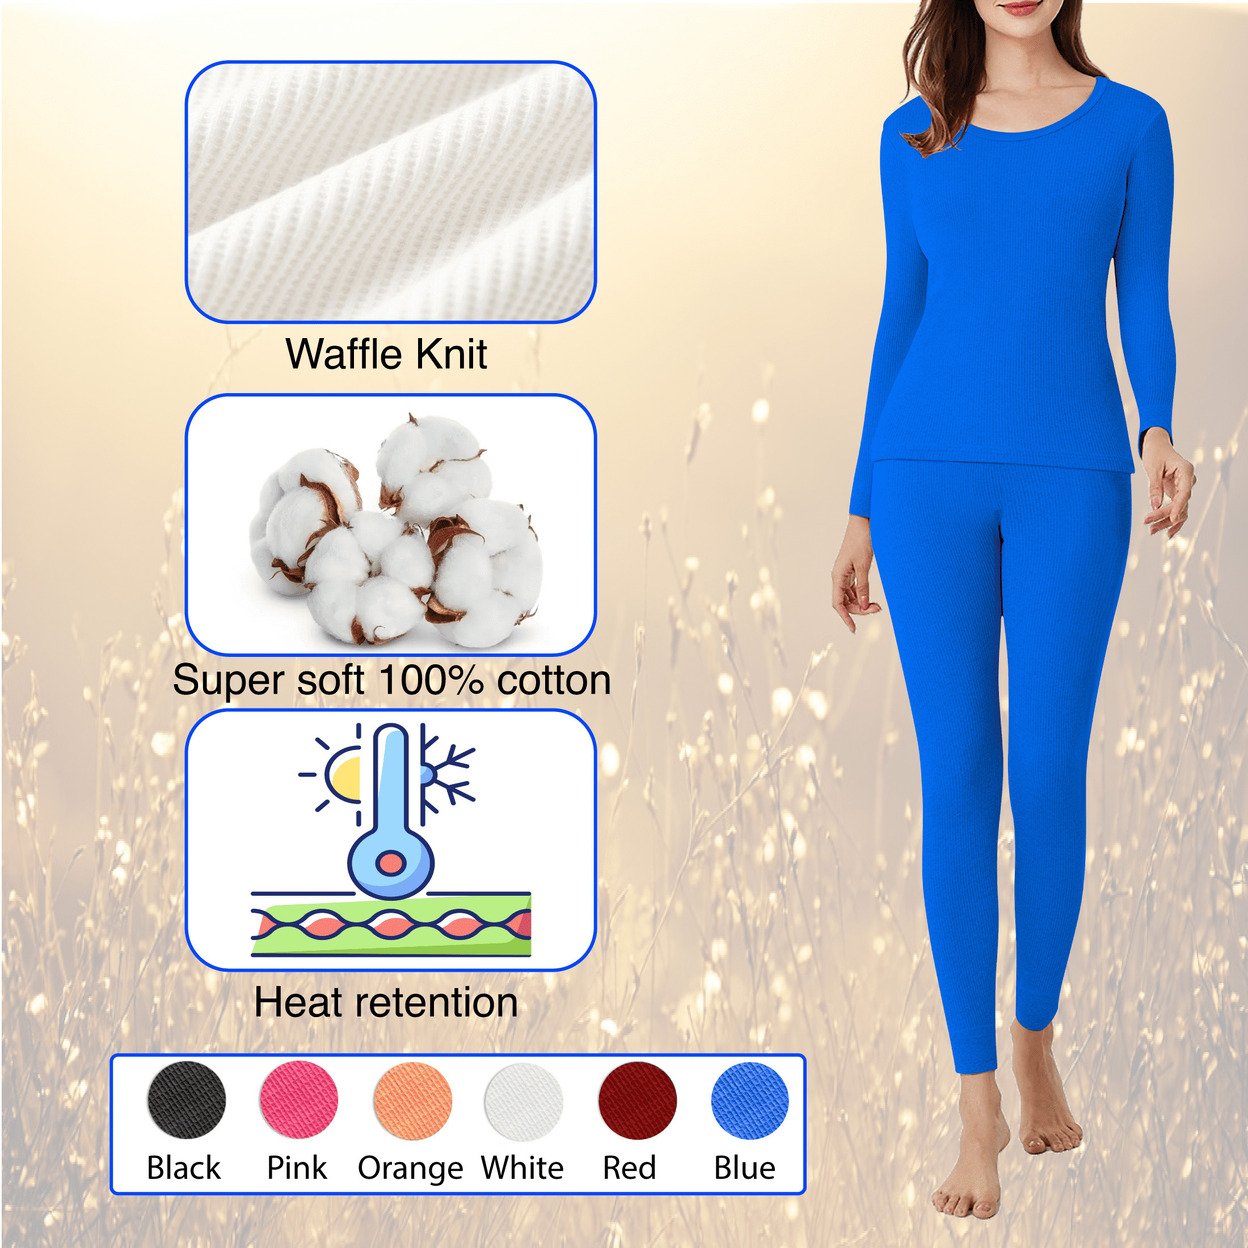 2-Piece: Women's Ultra Soft Cotton Waffle Knit Thermal Sets - Pink, Medium